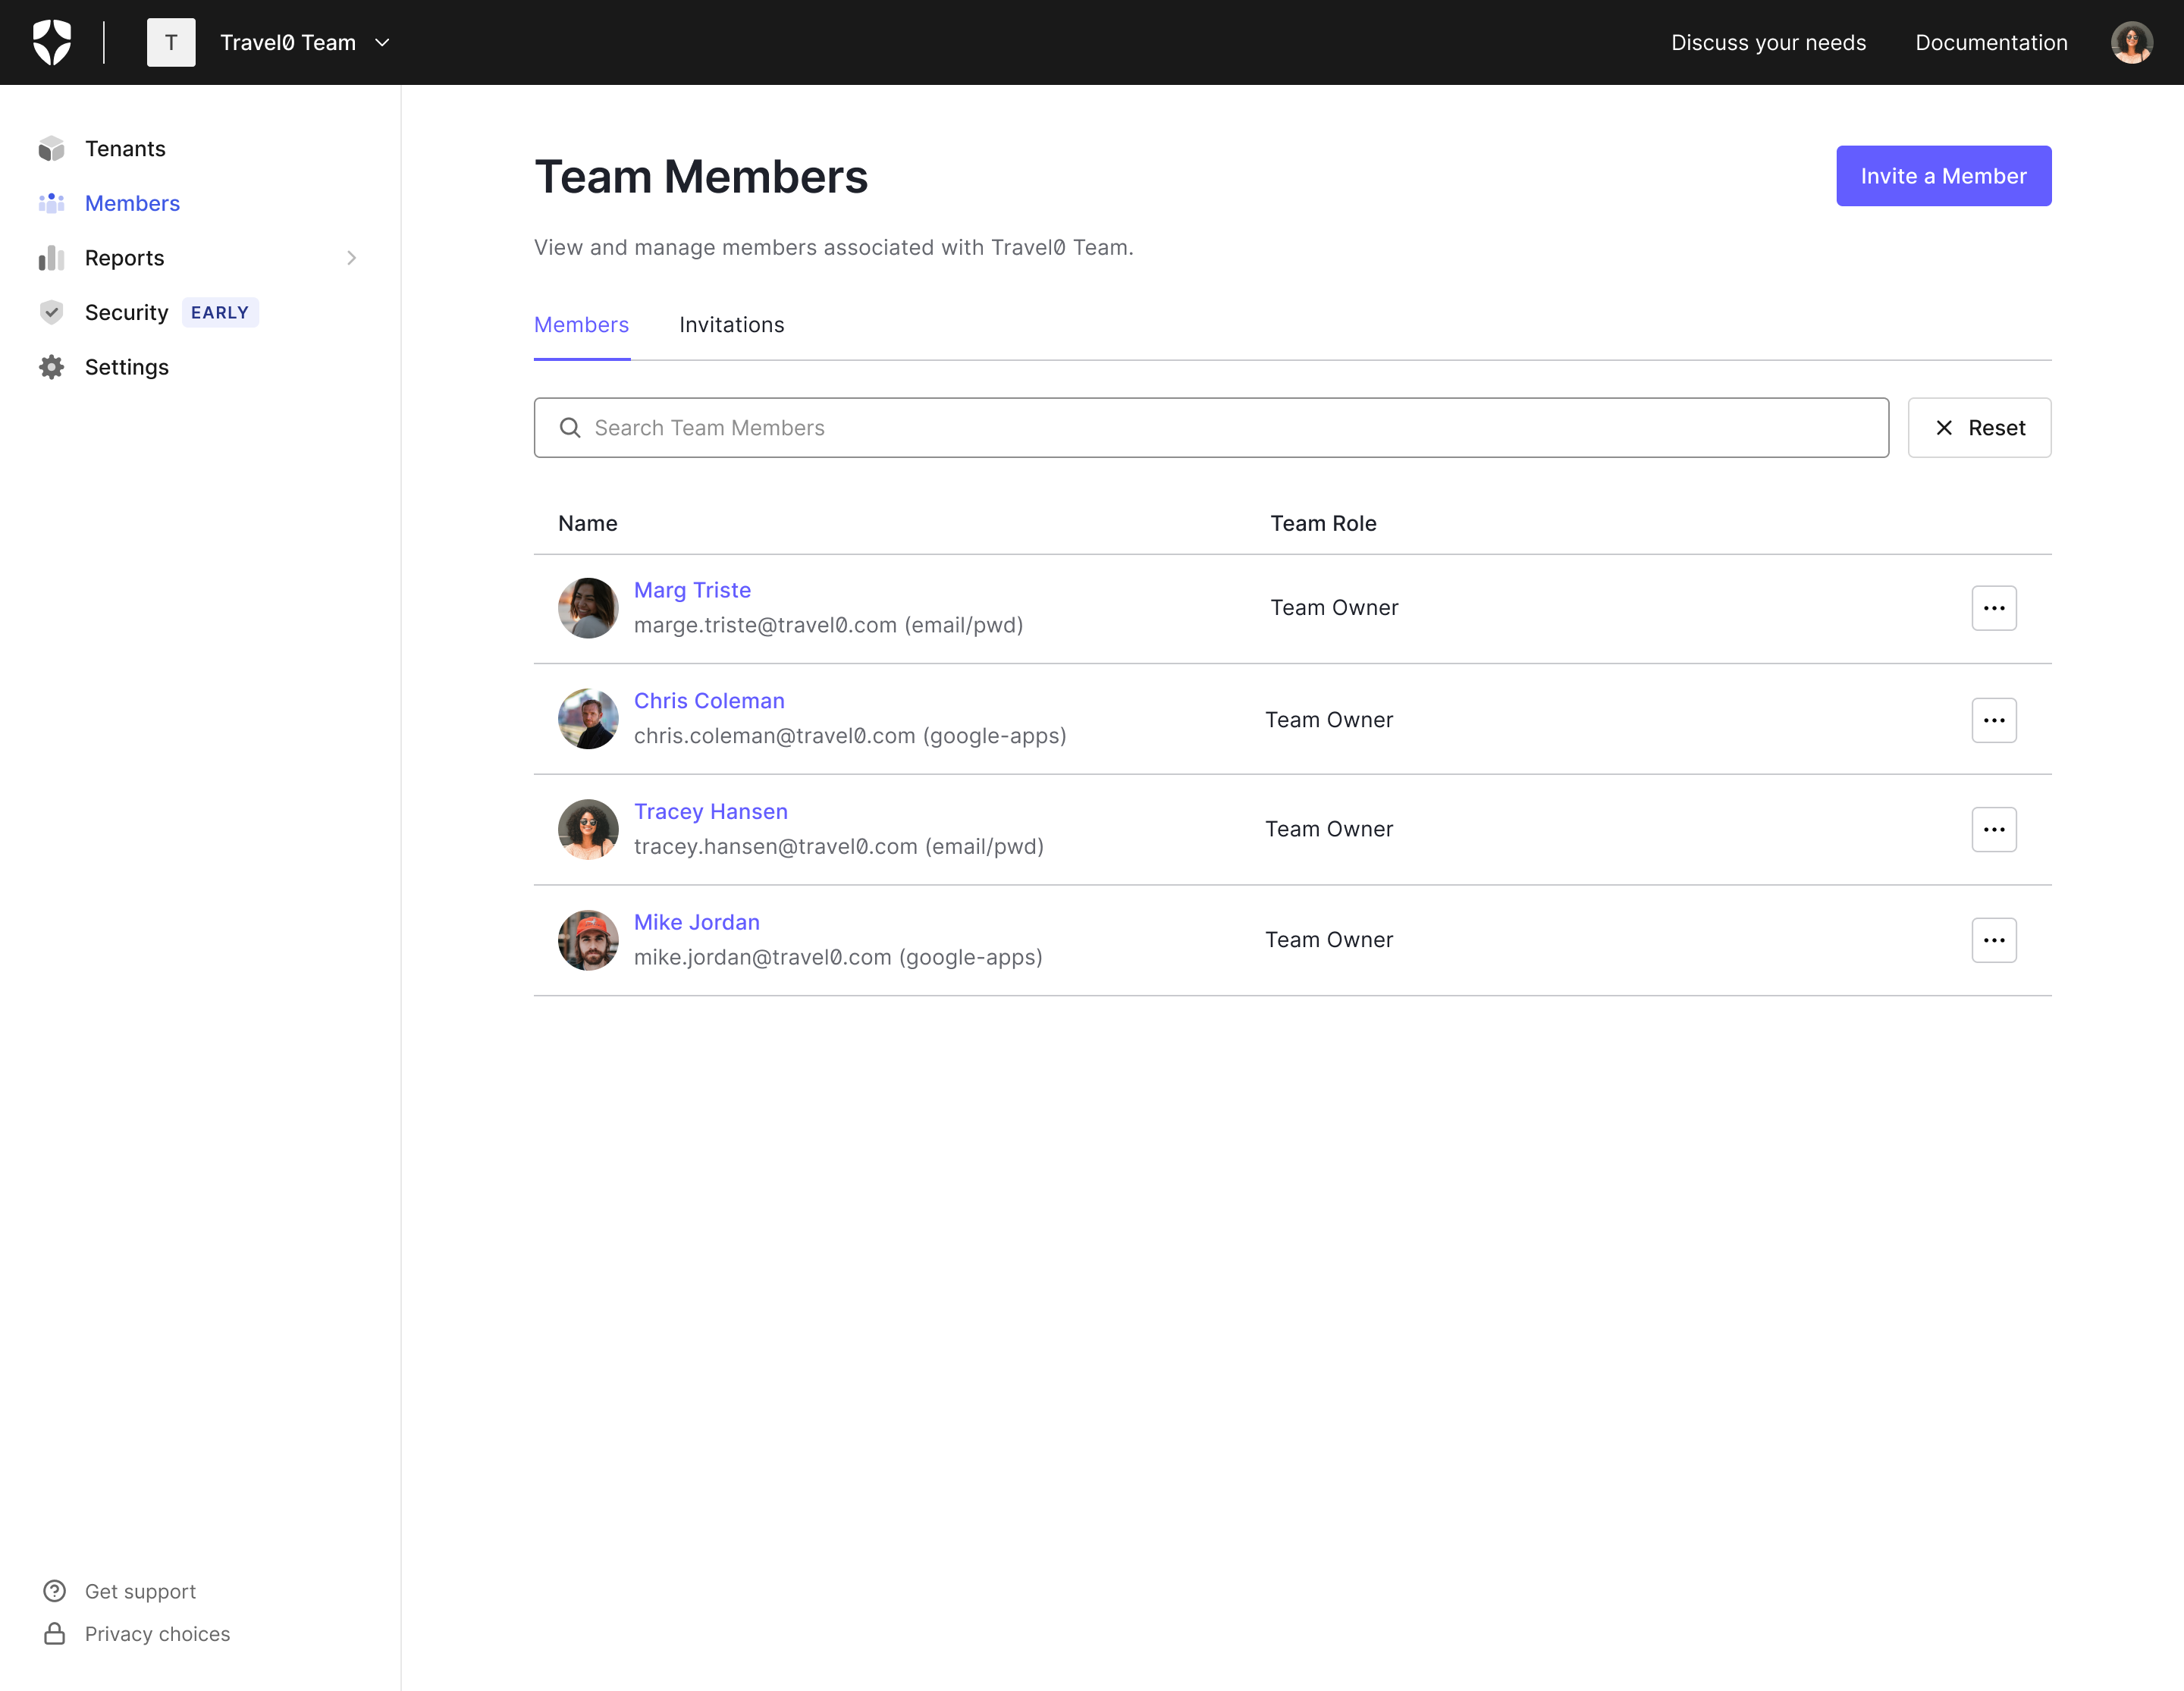 Member list from Teams Members pages